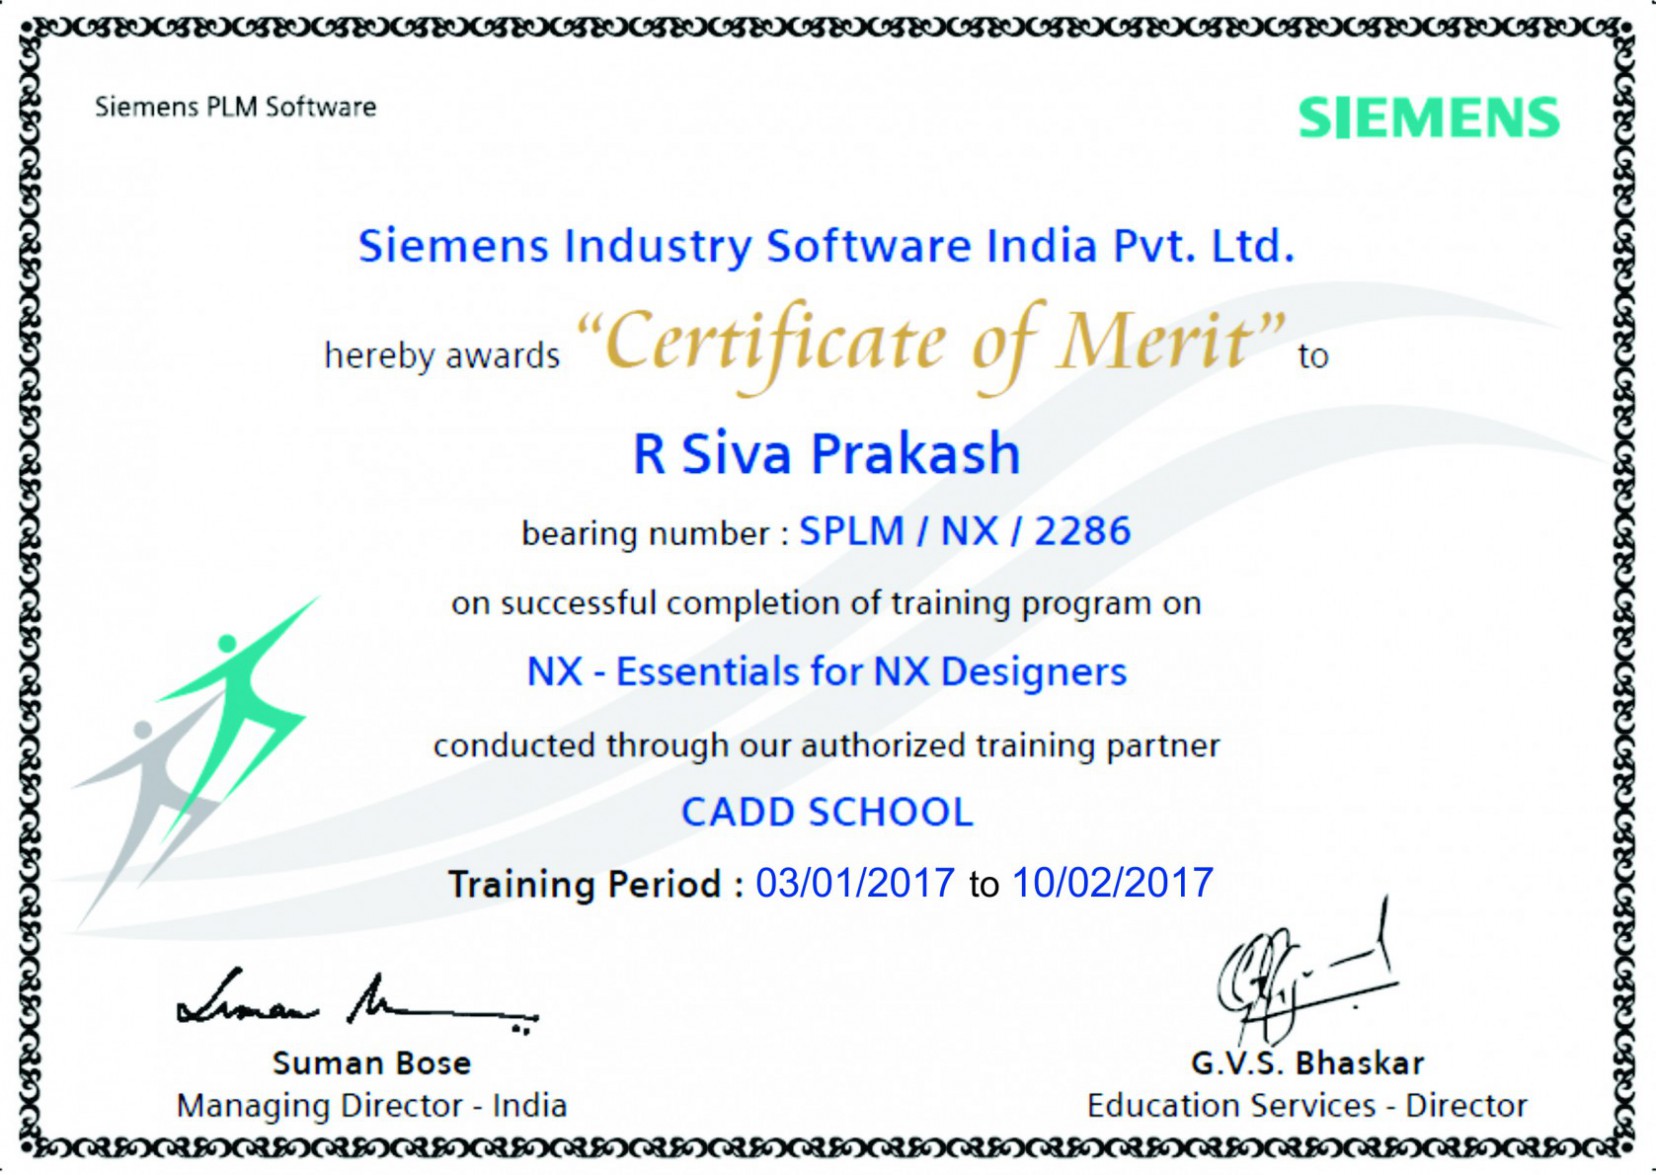 simens Certificate